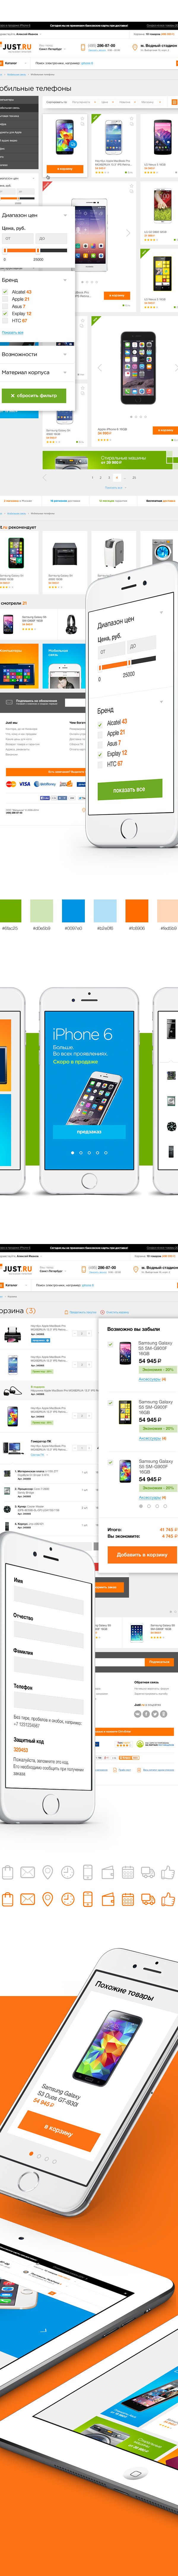 UI ux e-commerce online store Prototyping